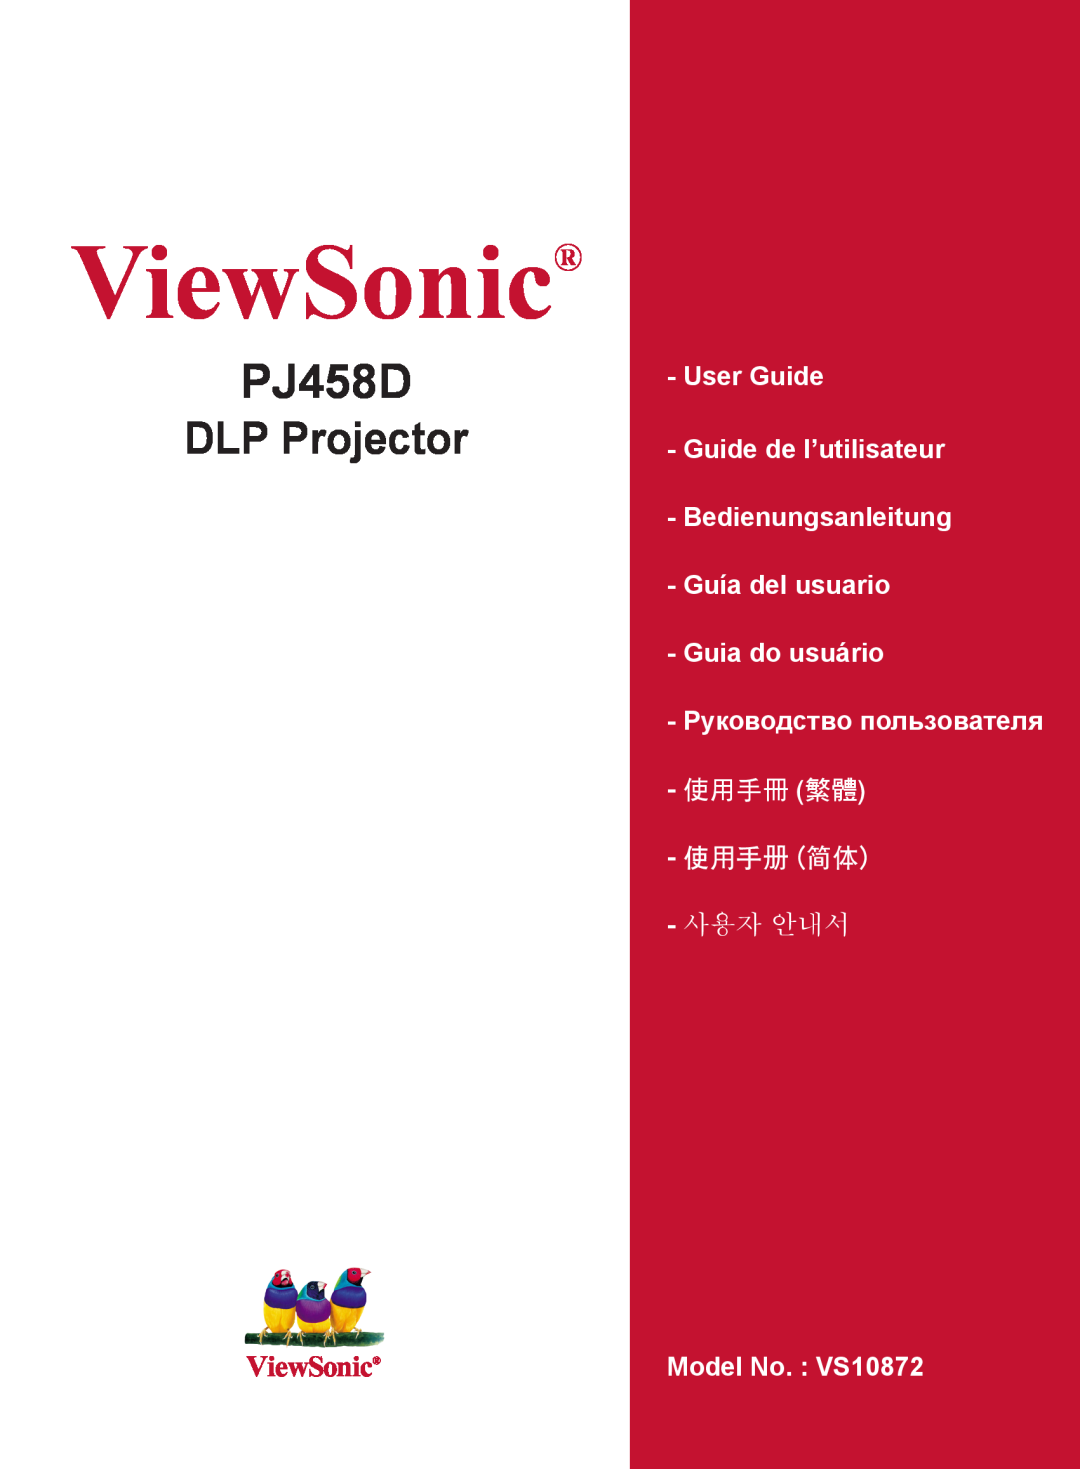 ViewSonic VS10872 manual ViewSonic, PJ458D, DLP Projector, User Guide Guide de l’utilisateur Bedienungsanleitung, 사용자 안내서 